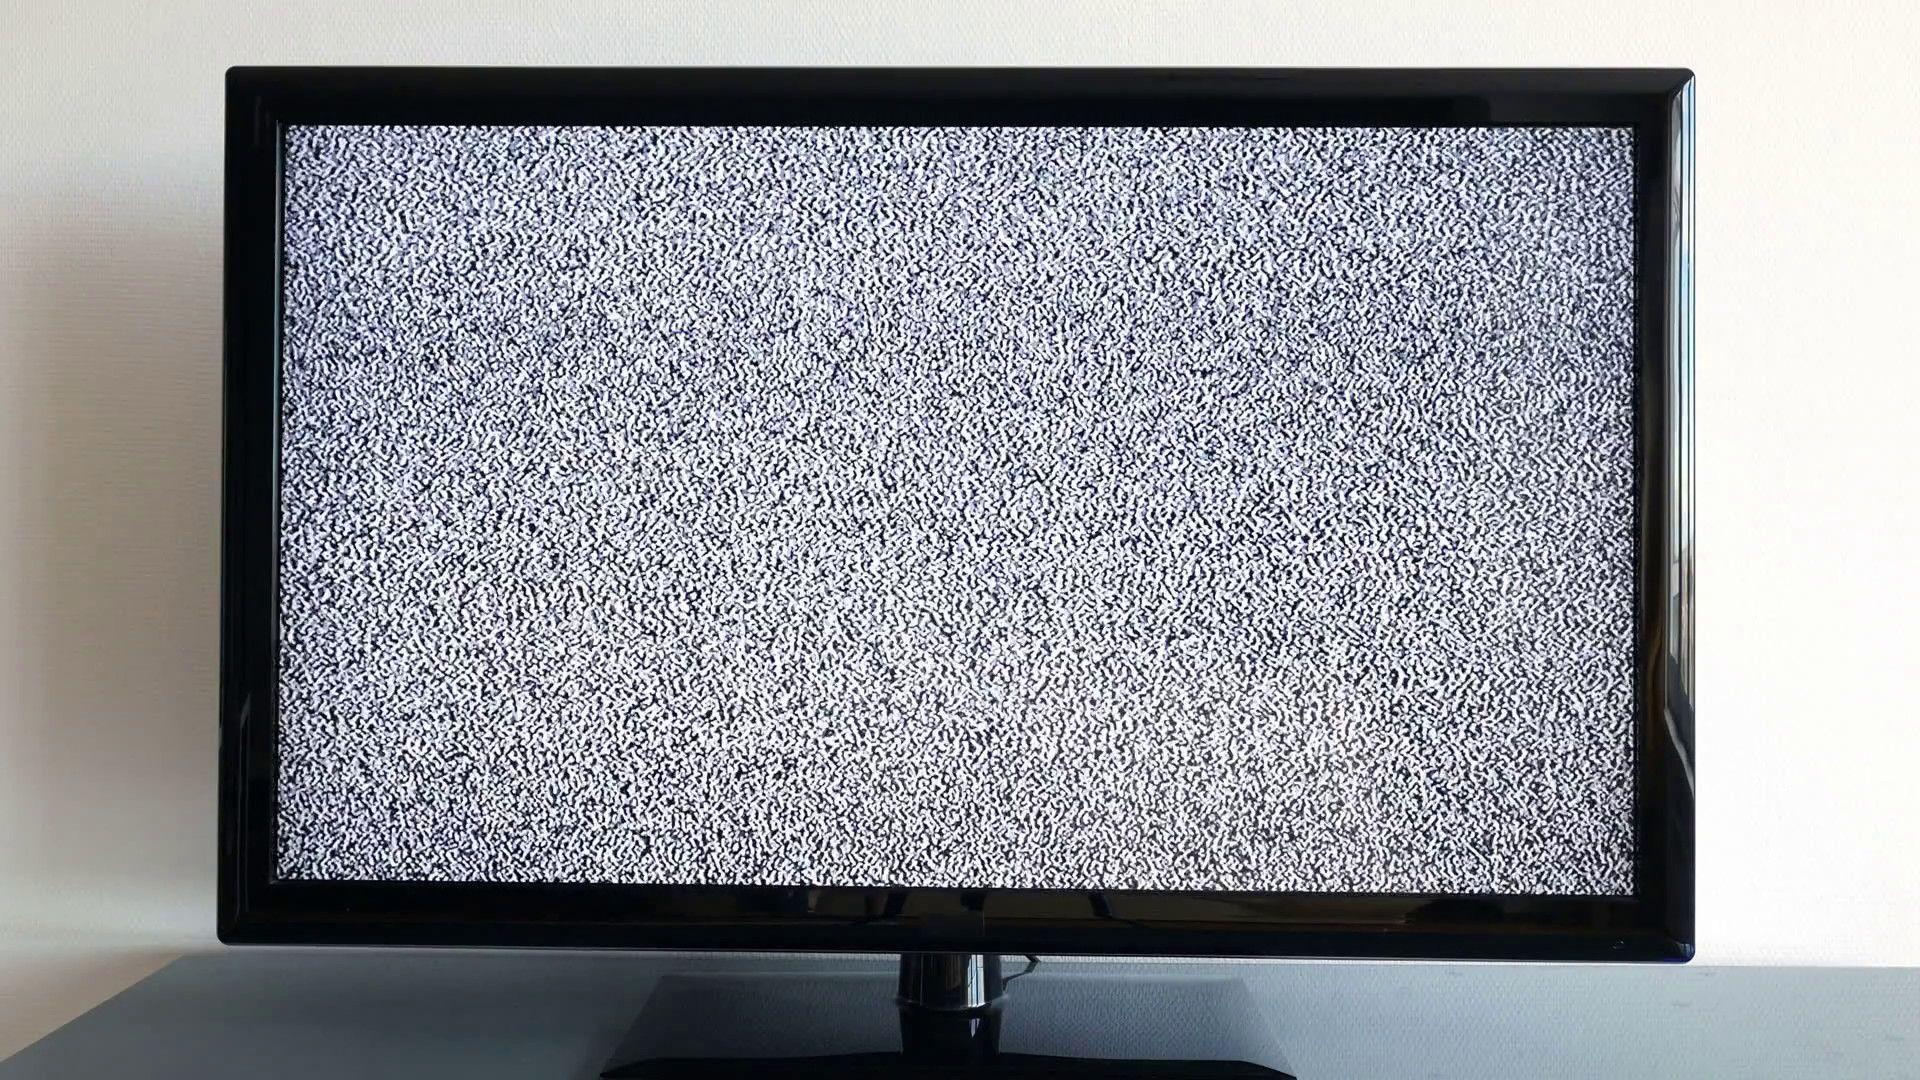 Экран телевизора название. Экран телевизора. Телевизор с помехами. Шум телевизора. Телевизор без сигнала.